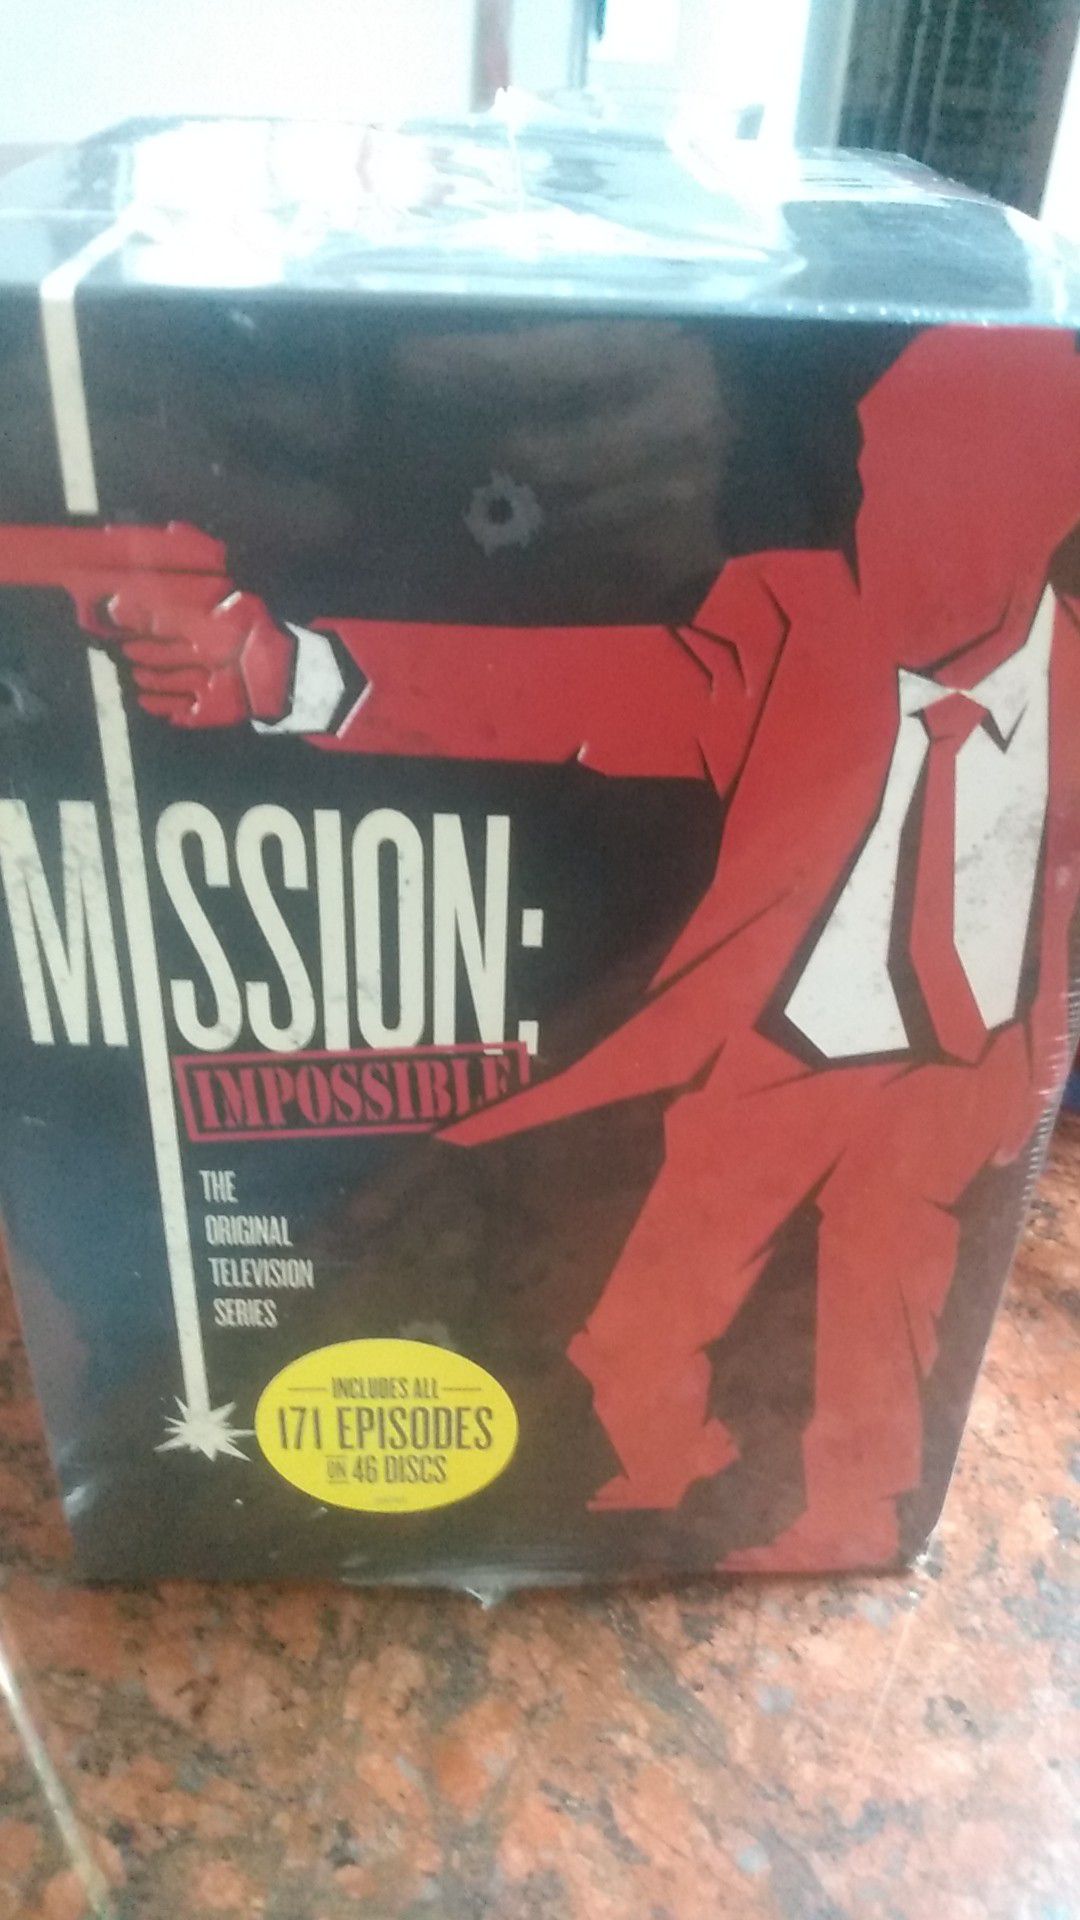 Original televison show mission impossible